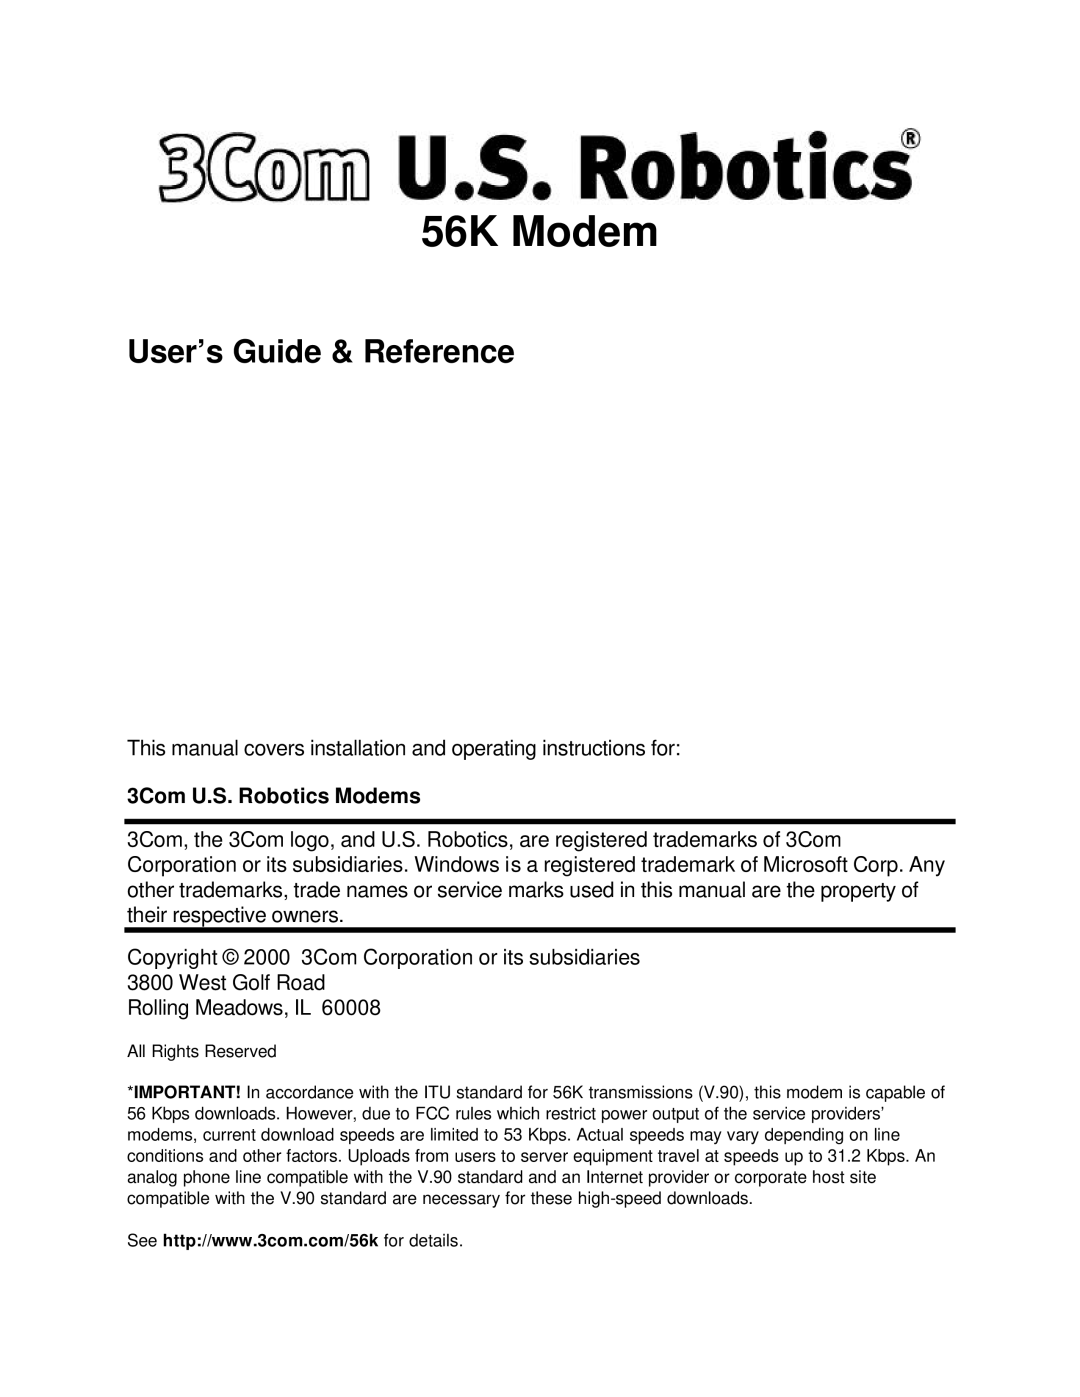 USRobotics 3Com manual 56K Modem 